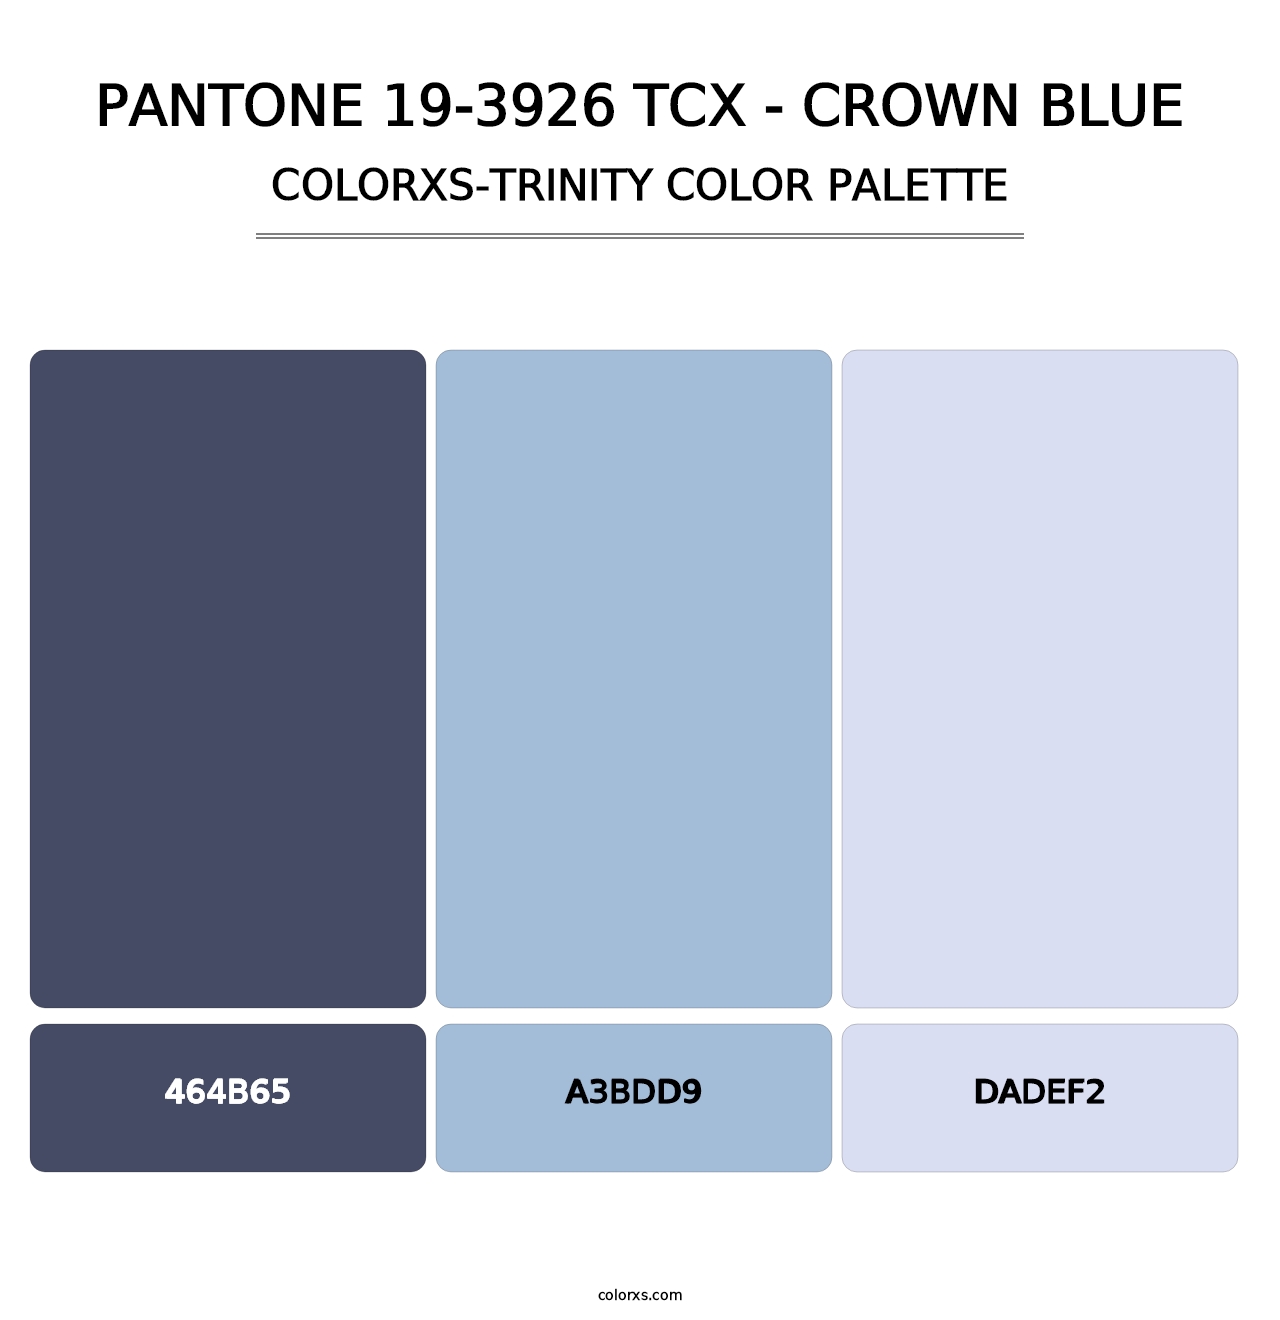 PANTONE 19-3926 TCX - Crown Blue - Colorxs Trinity Palette